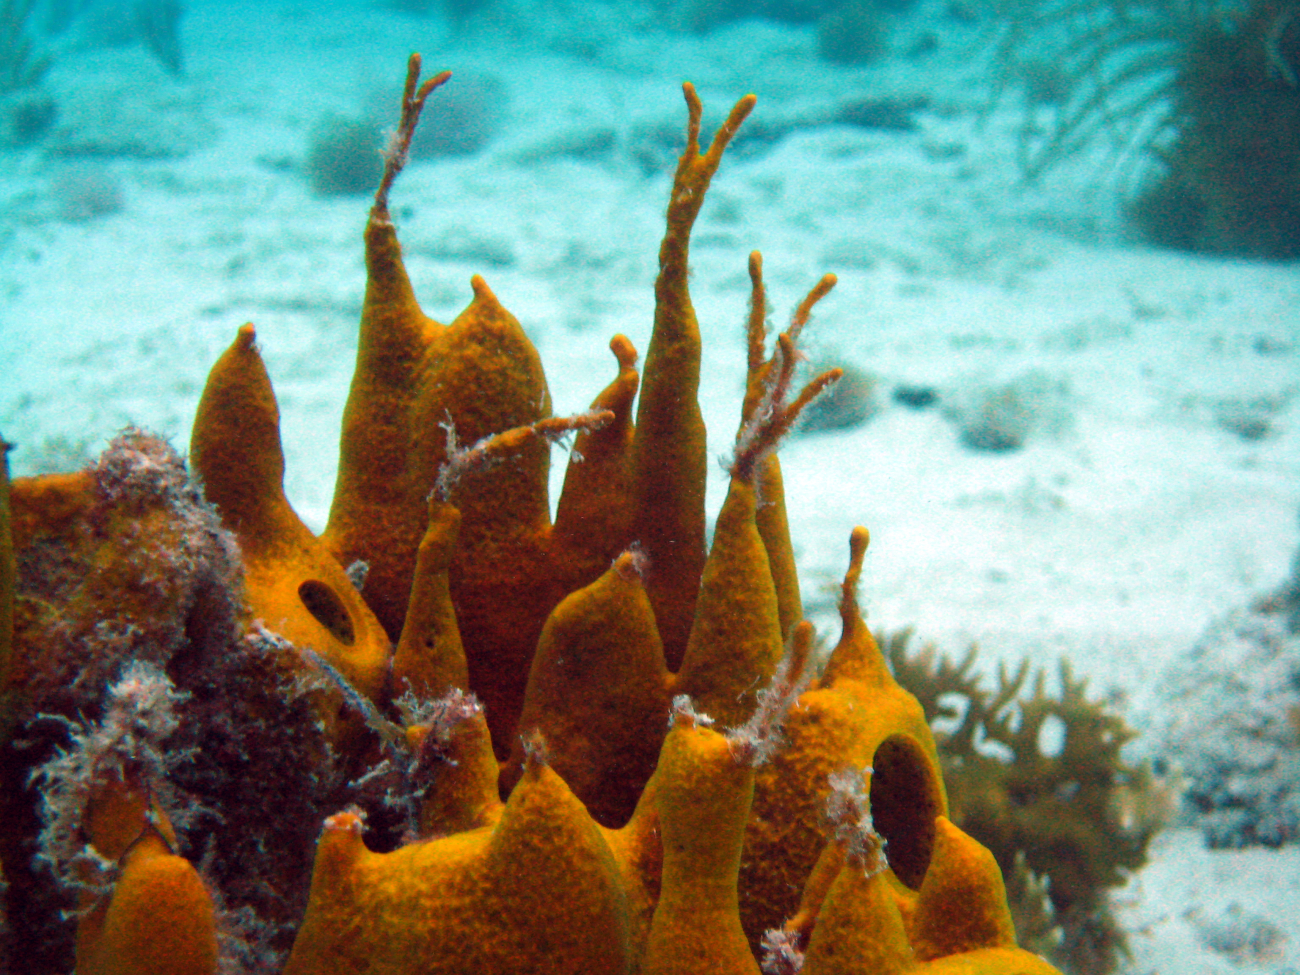 Orange barrel/tube sponge (Porifera sp